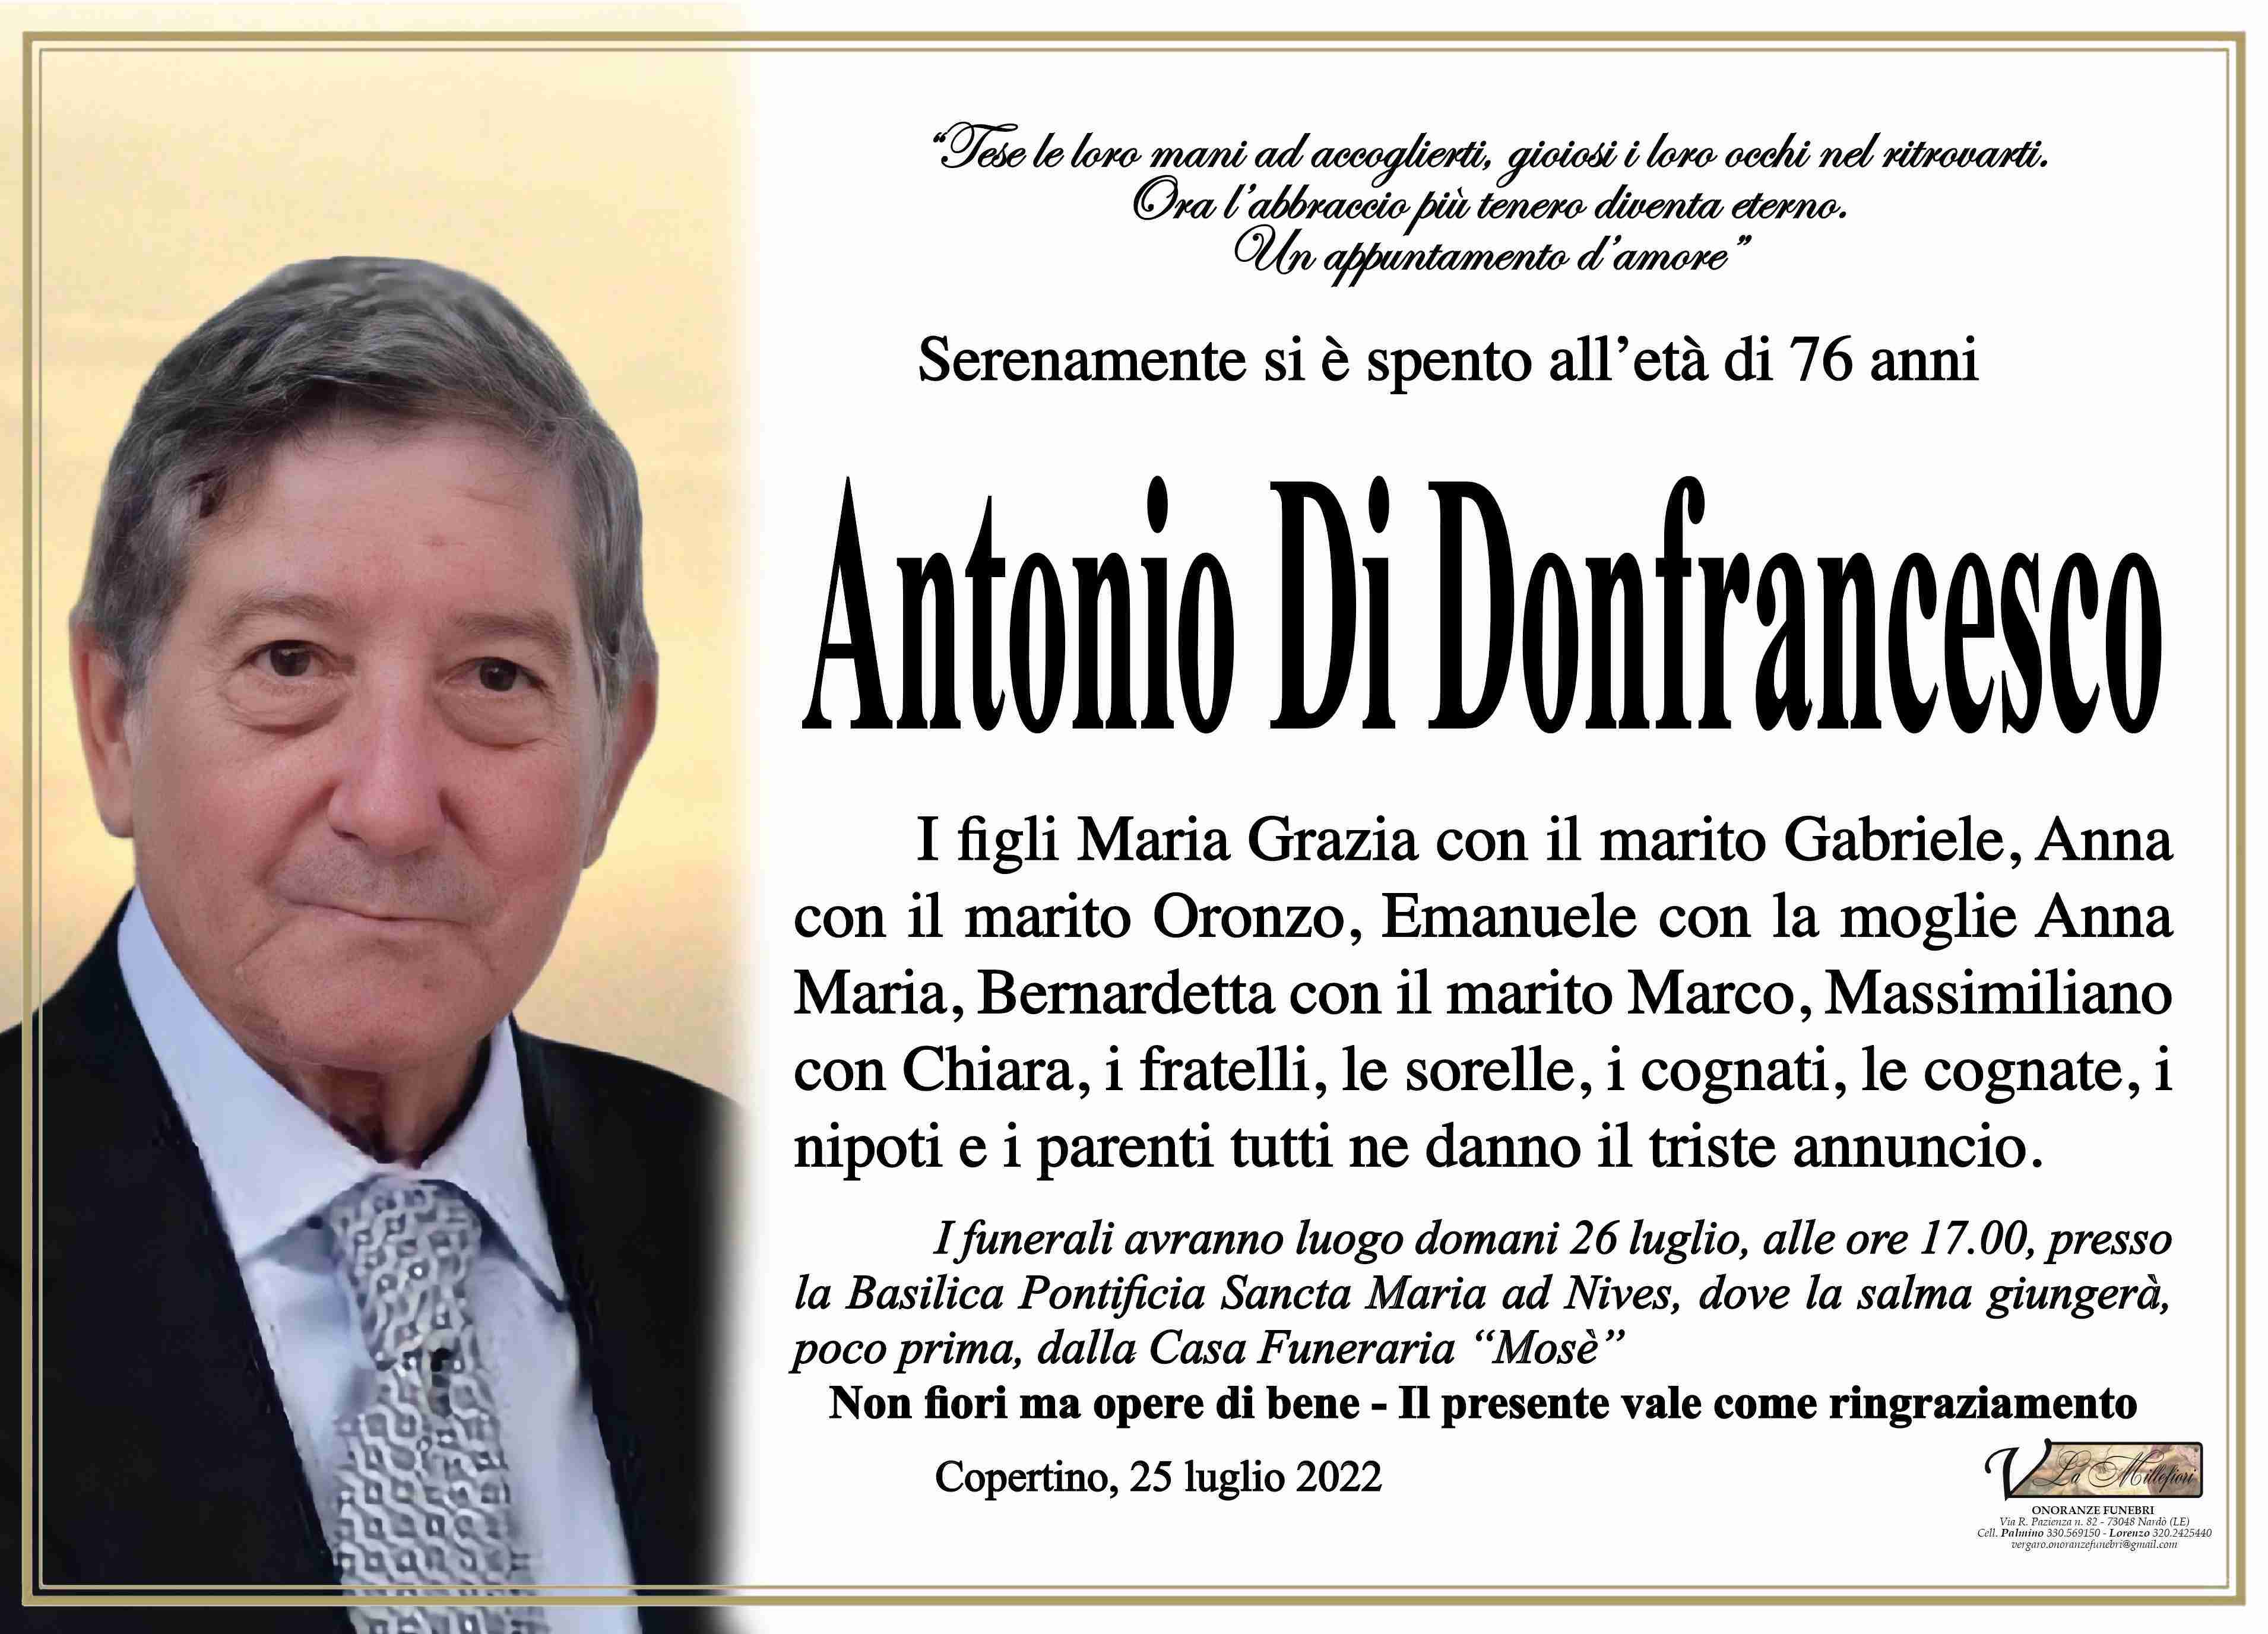 Antonio Di Donfrancesco